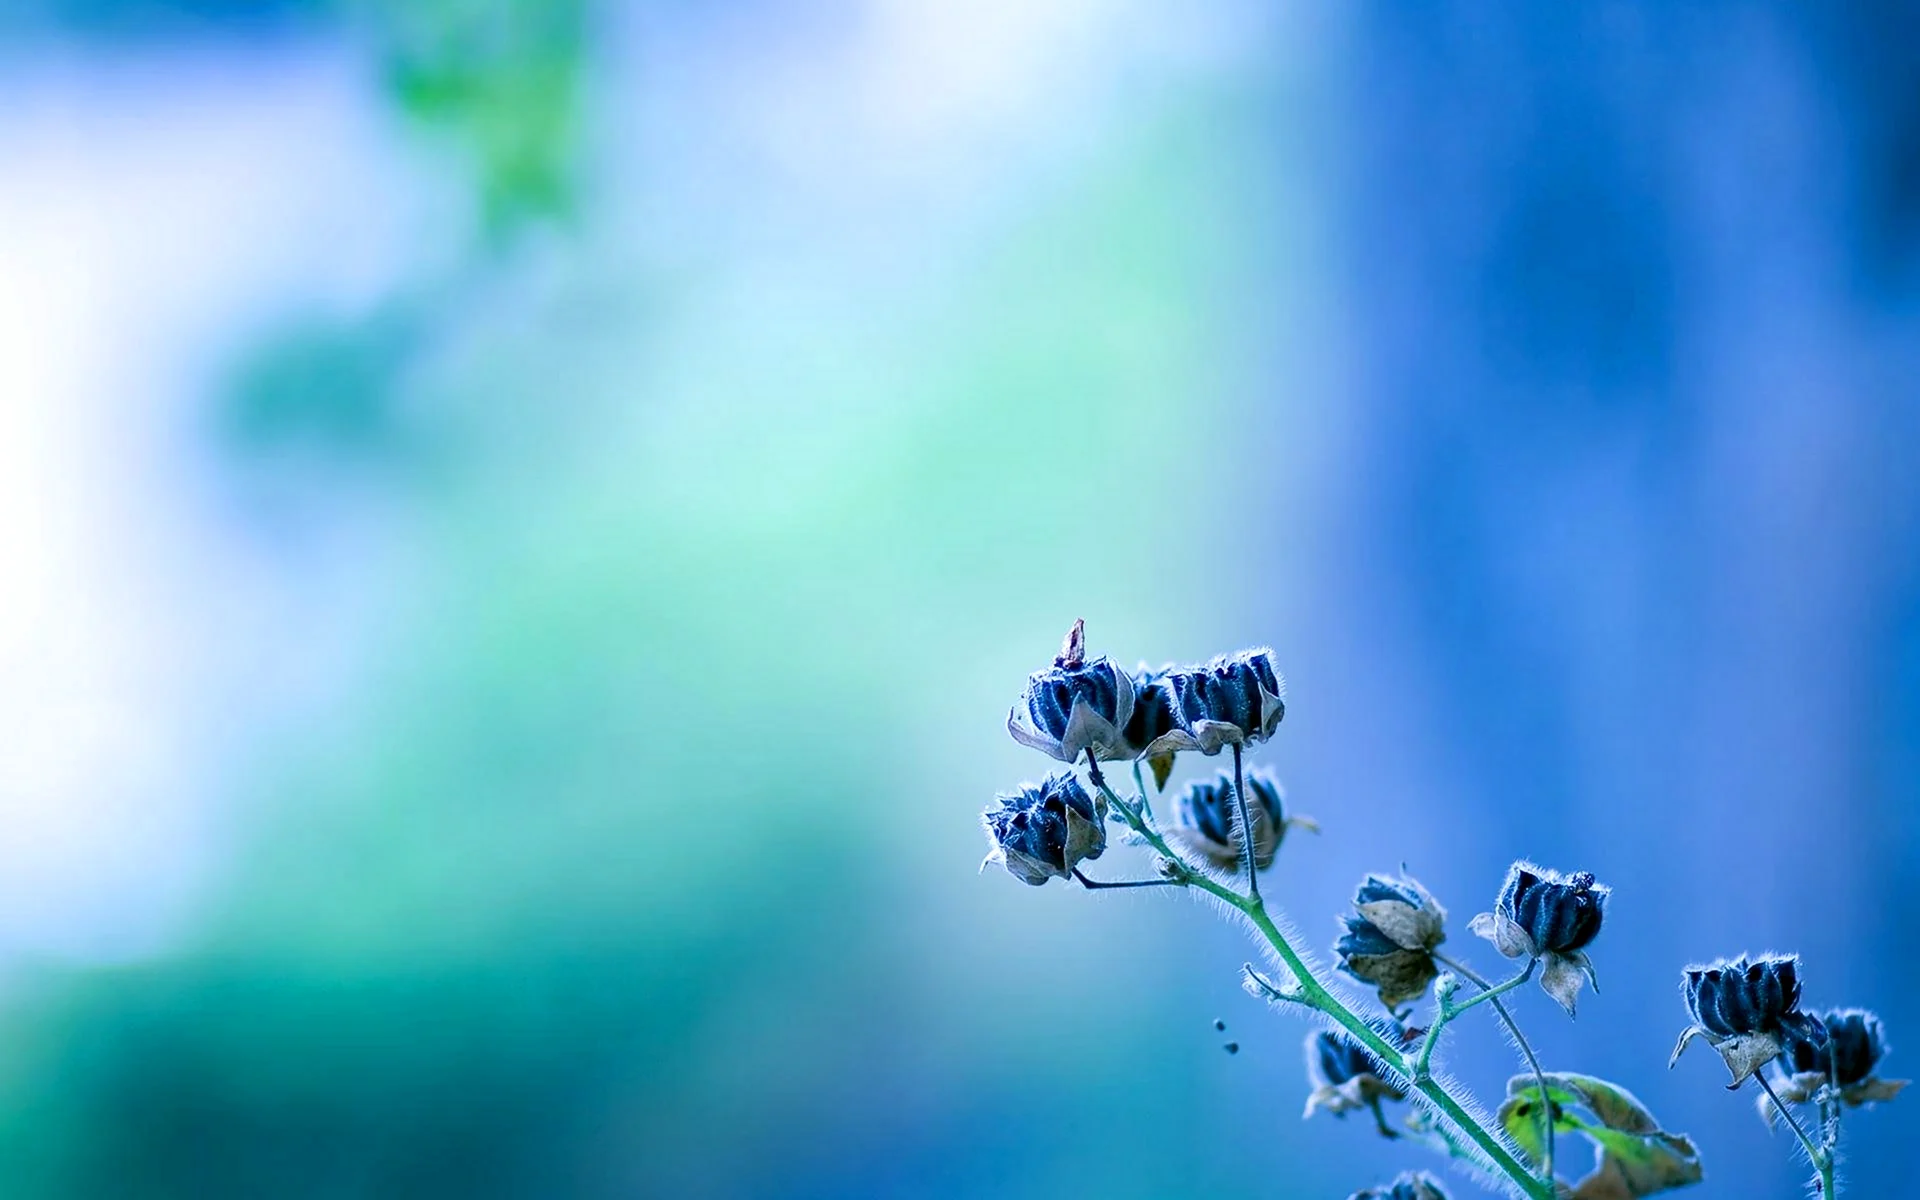 Цветы на голубом фоне